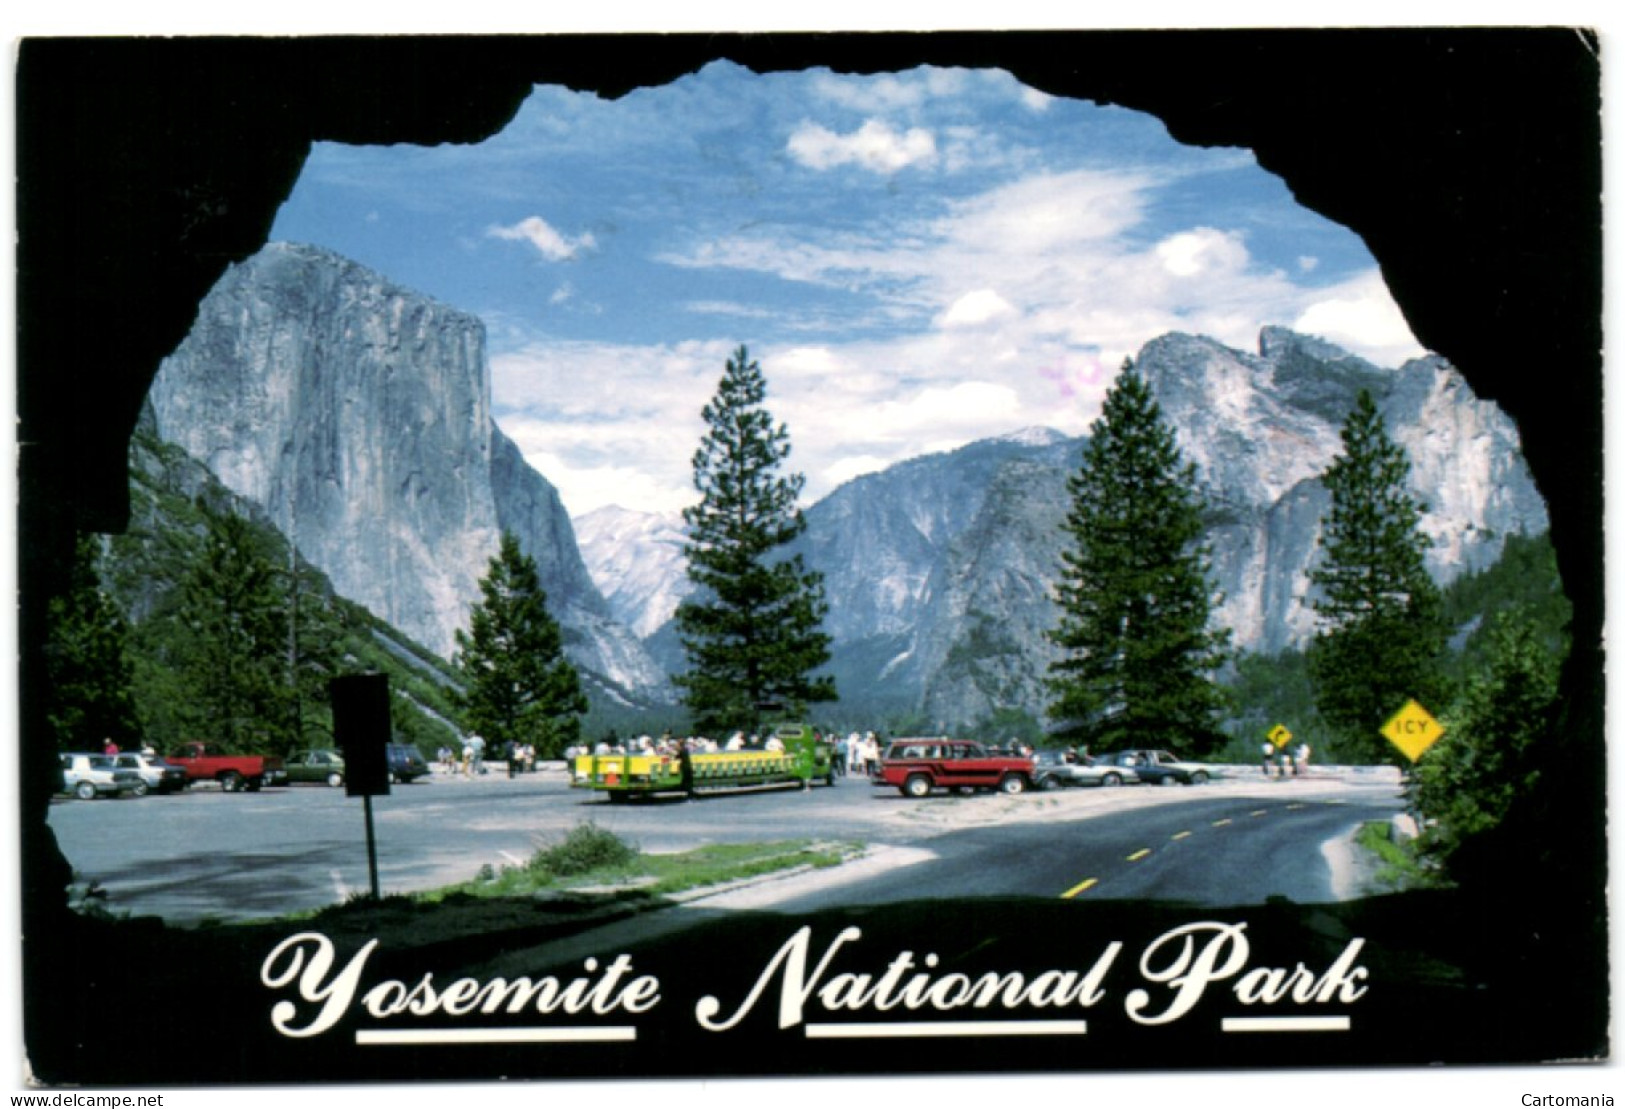 Yosemite National Park - Yosemite